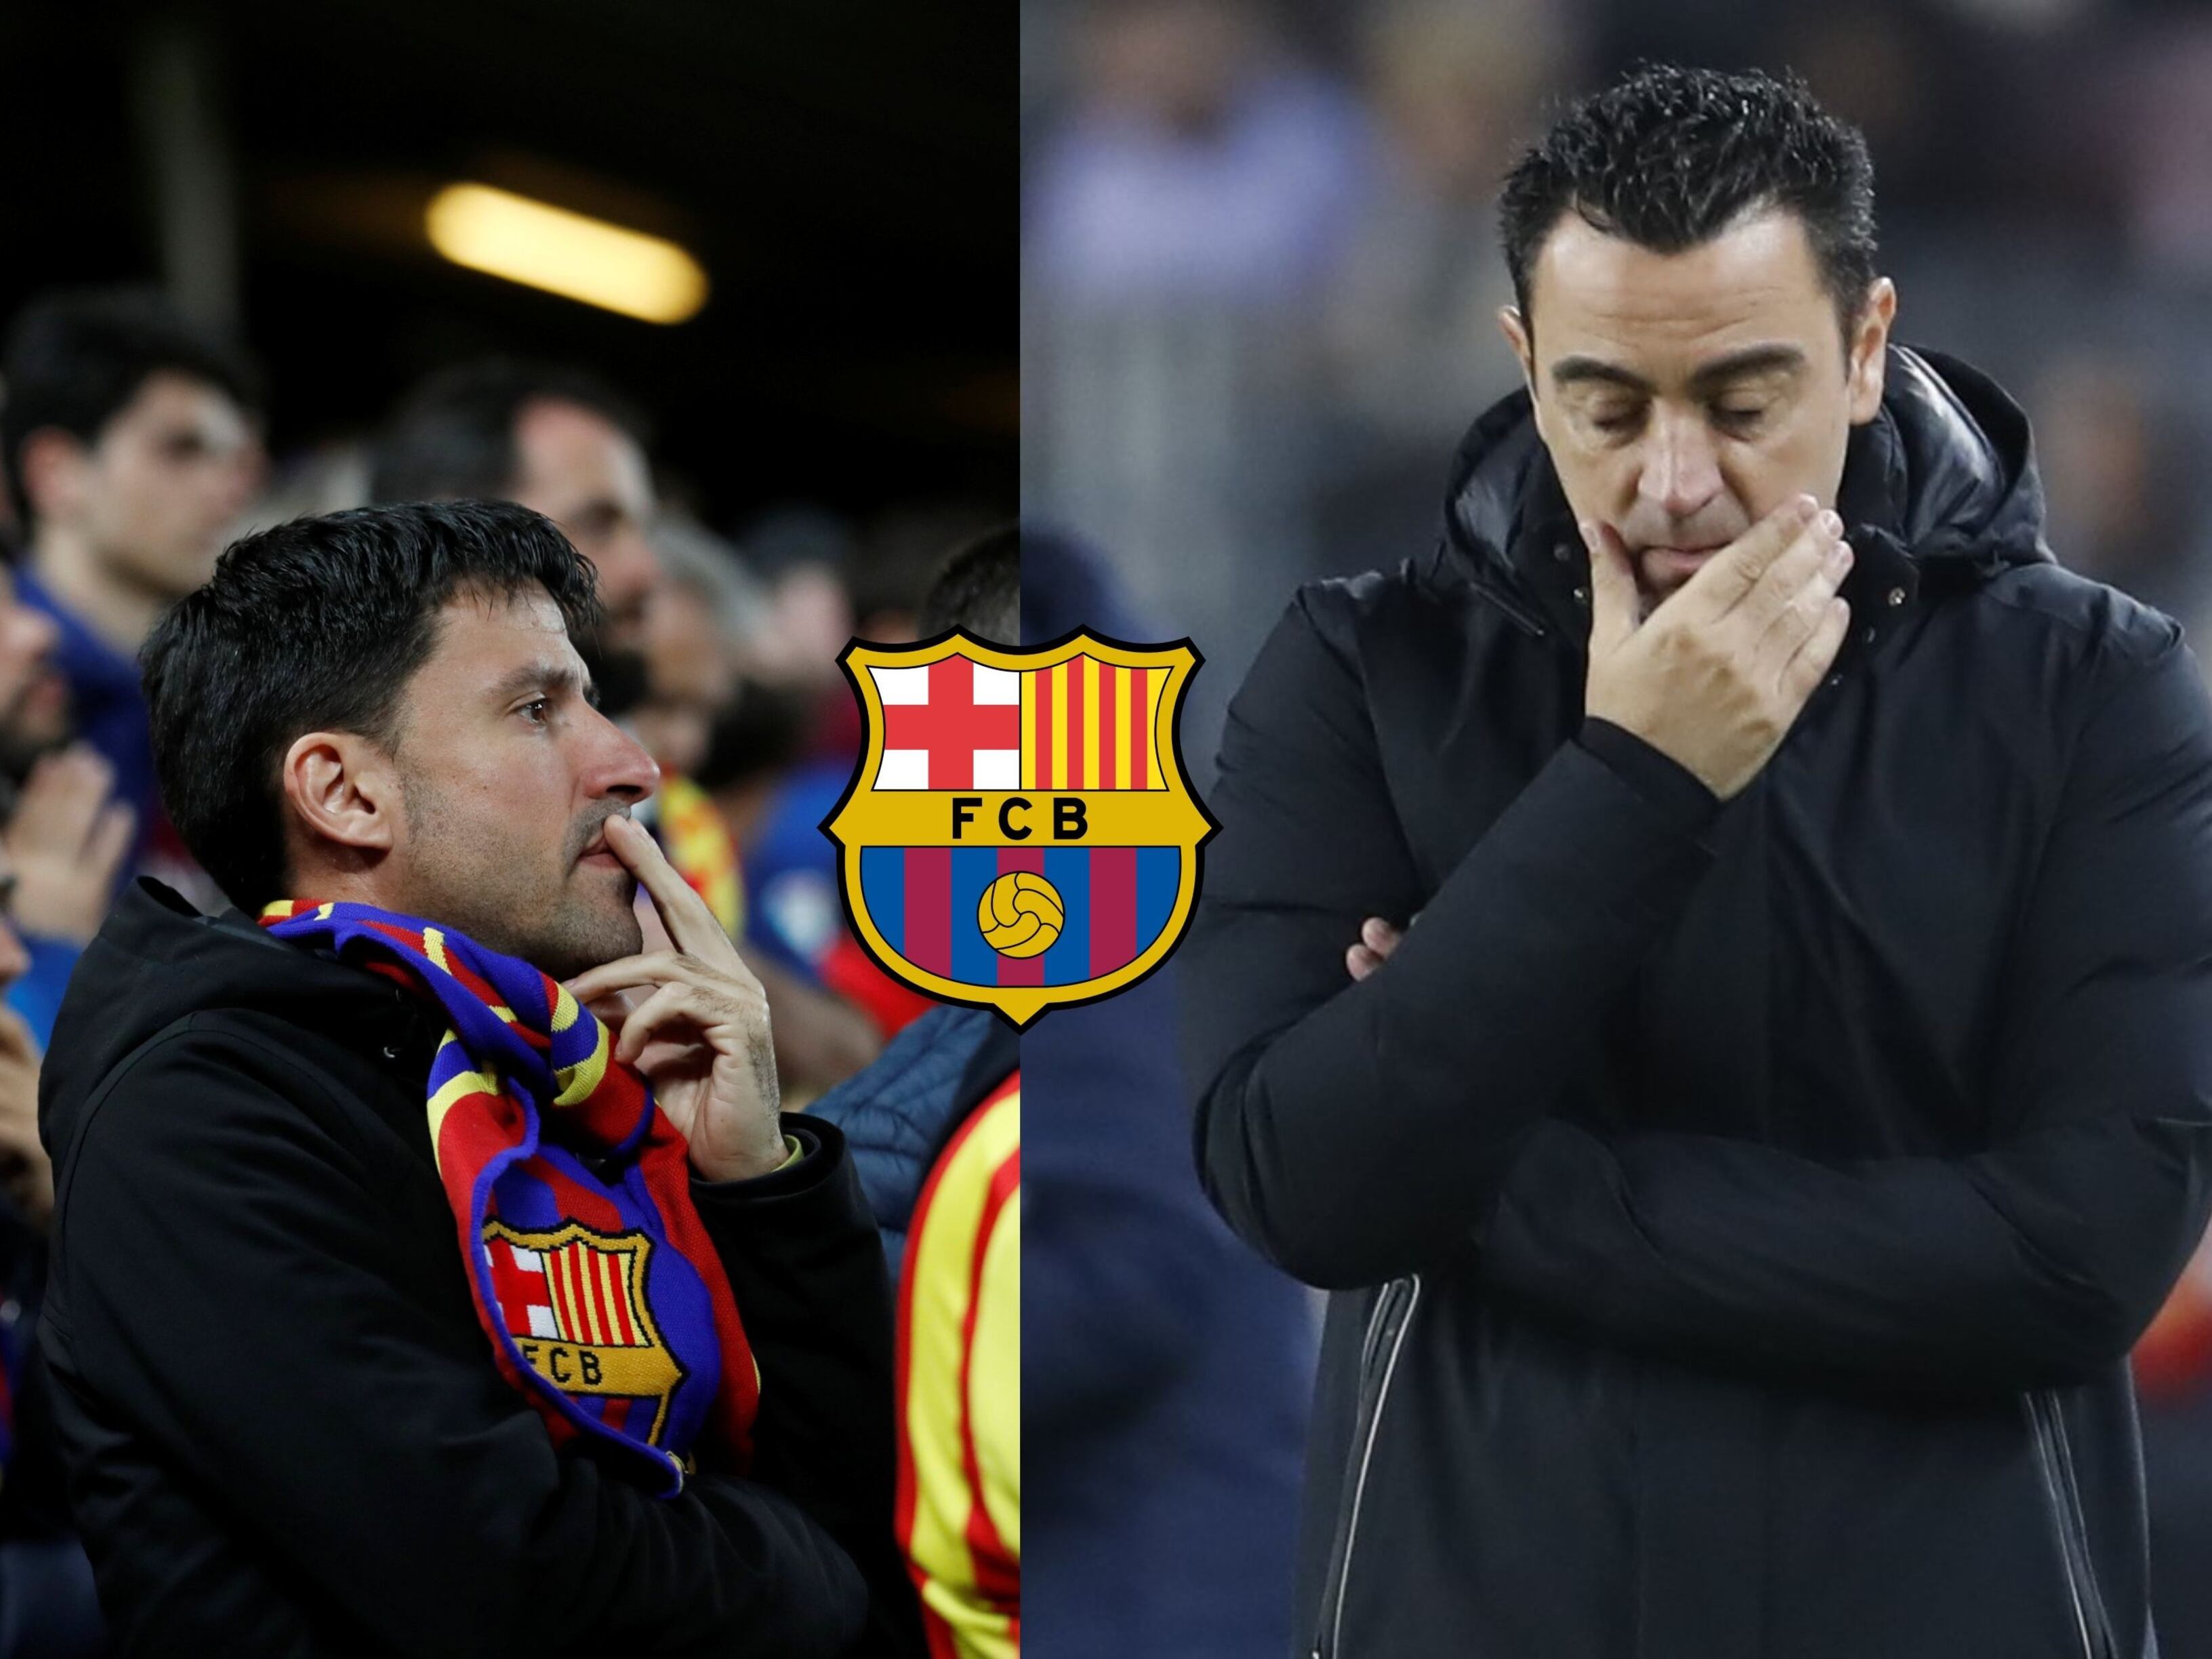 El intocable de Xavi que le falta el respeto a la camiseta de Barcelona